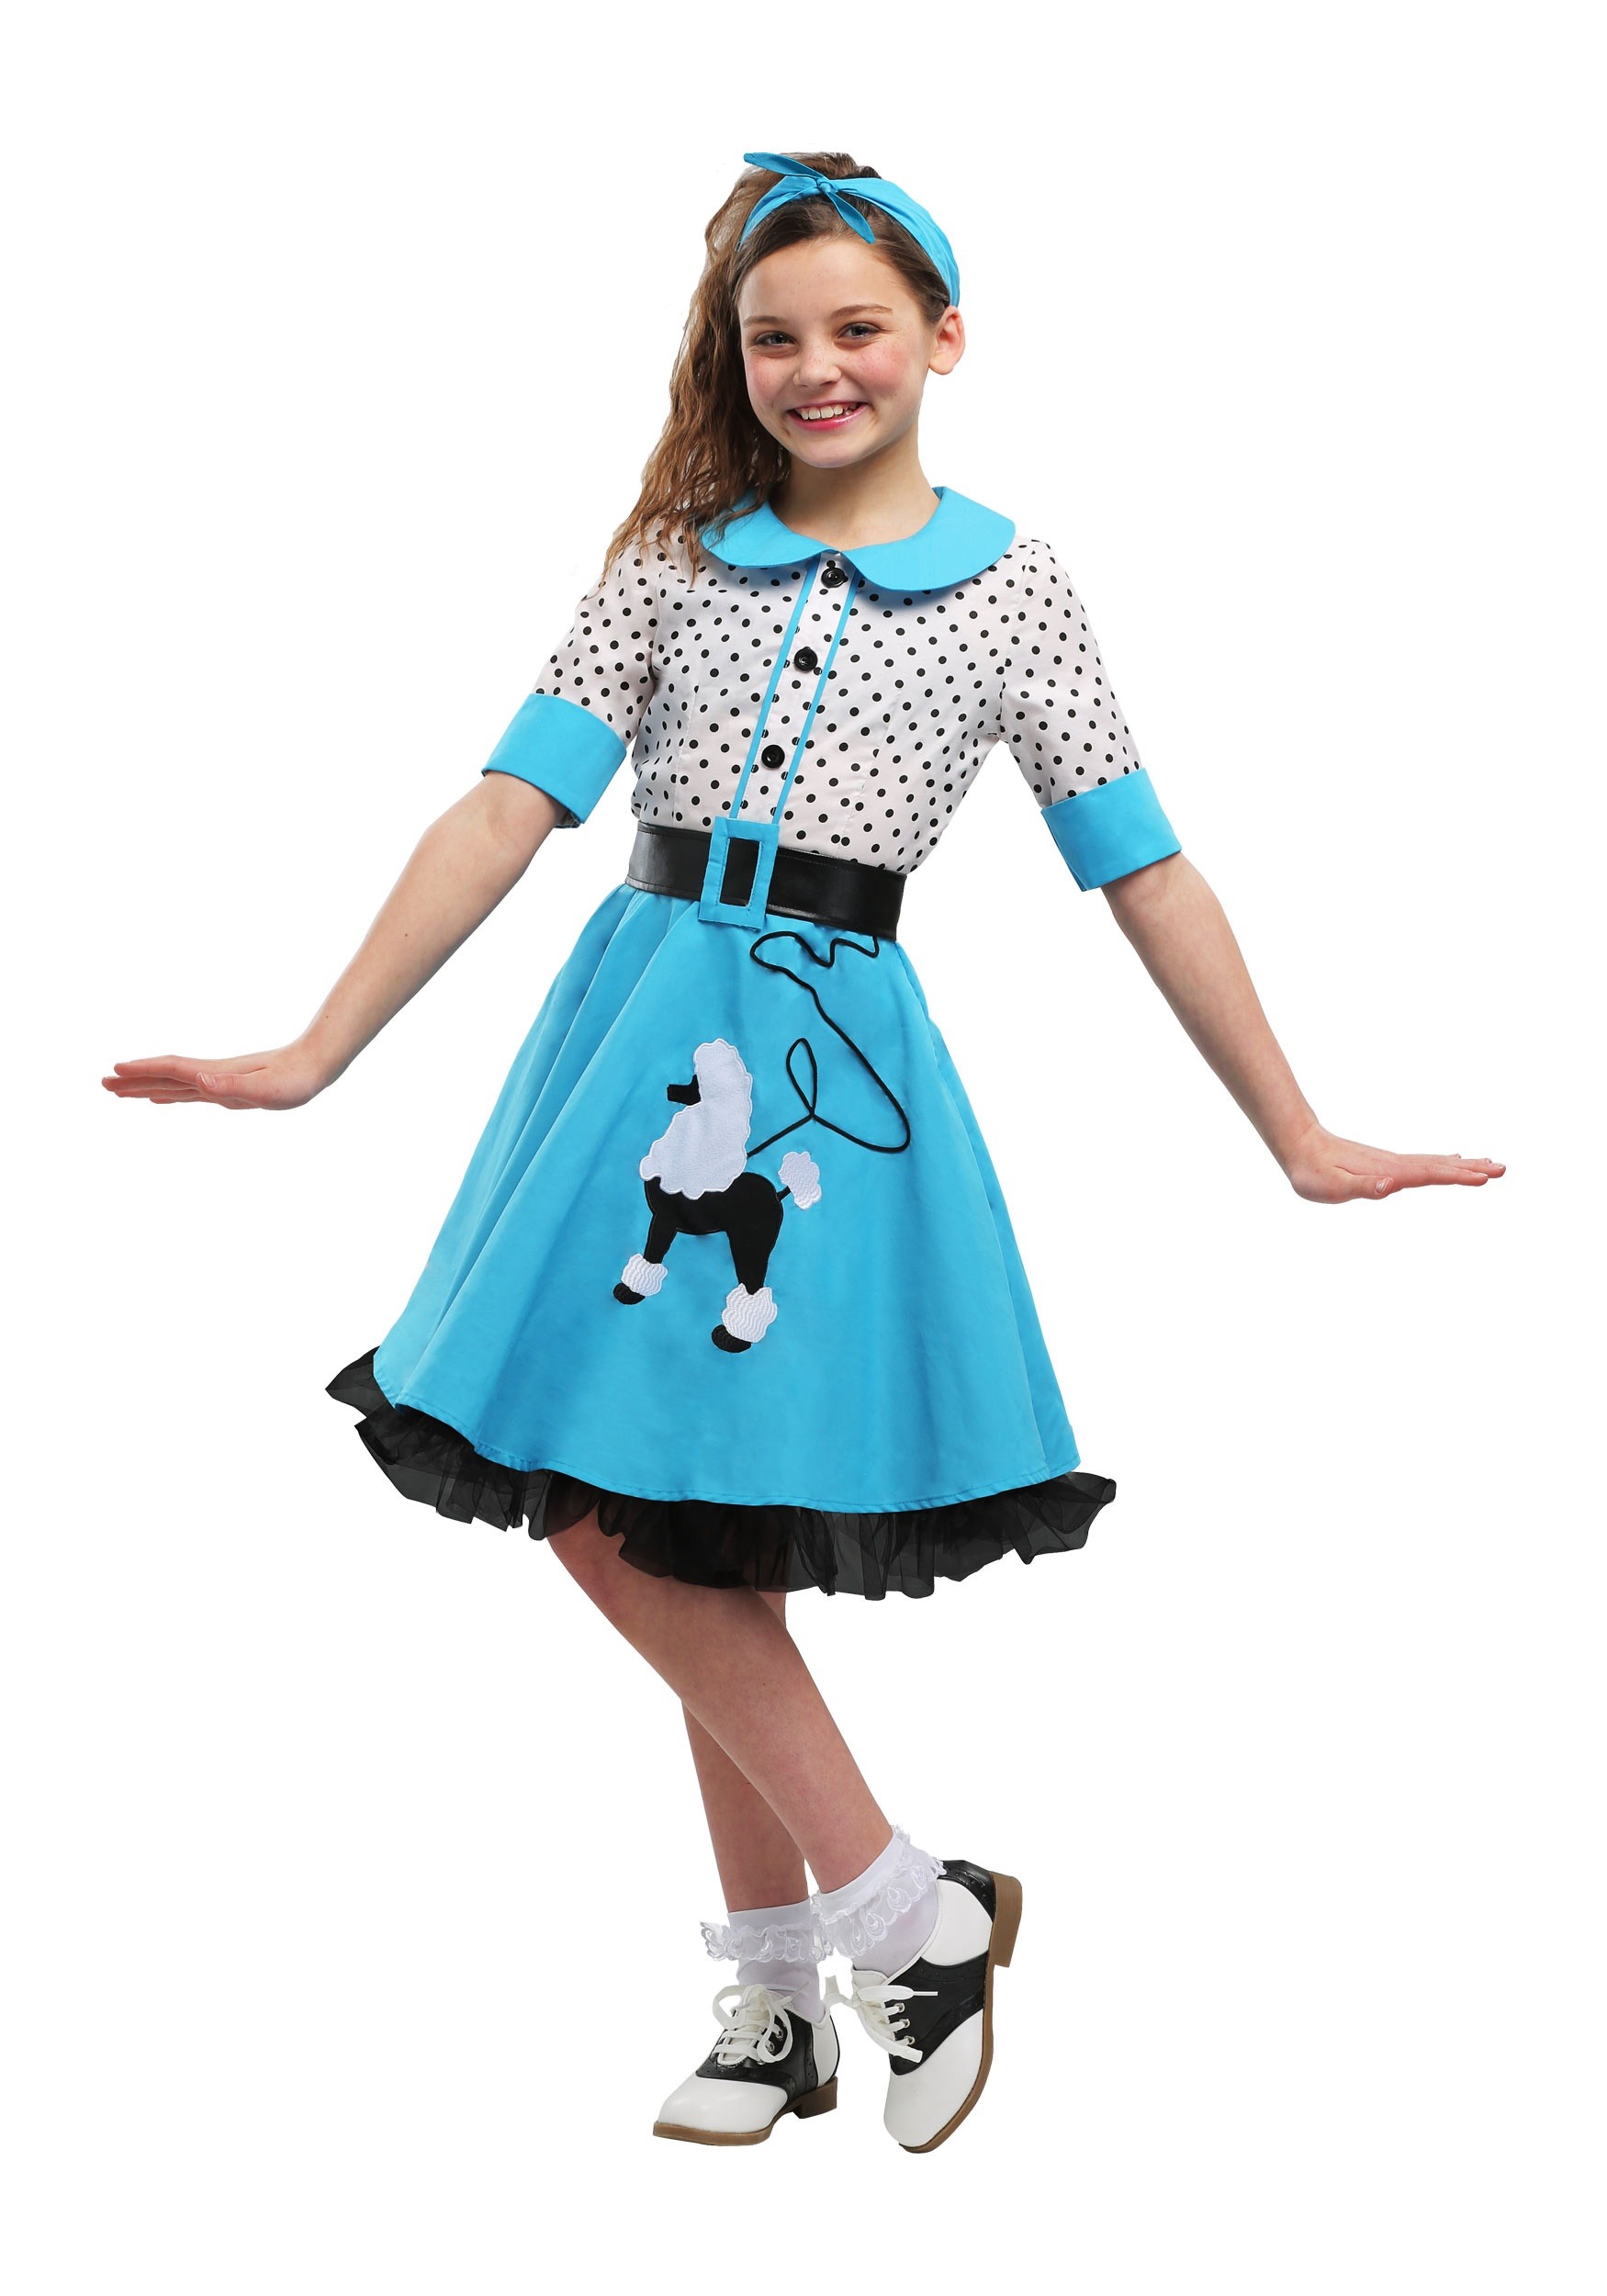 Photos - Fancy Dress FUN Costumes Sock Hop Cutie Costume for Kids Black/Blue/White FUN0